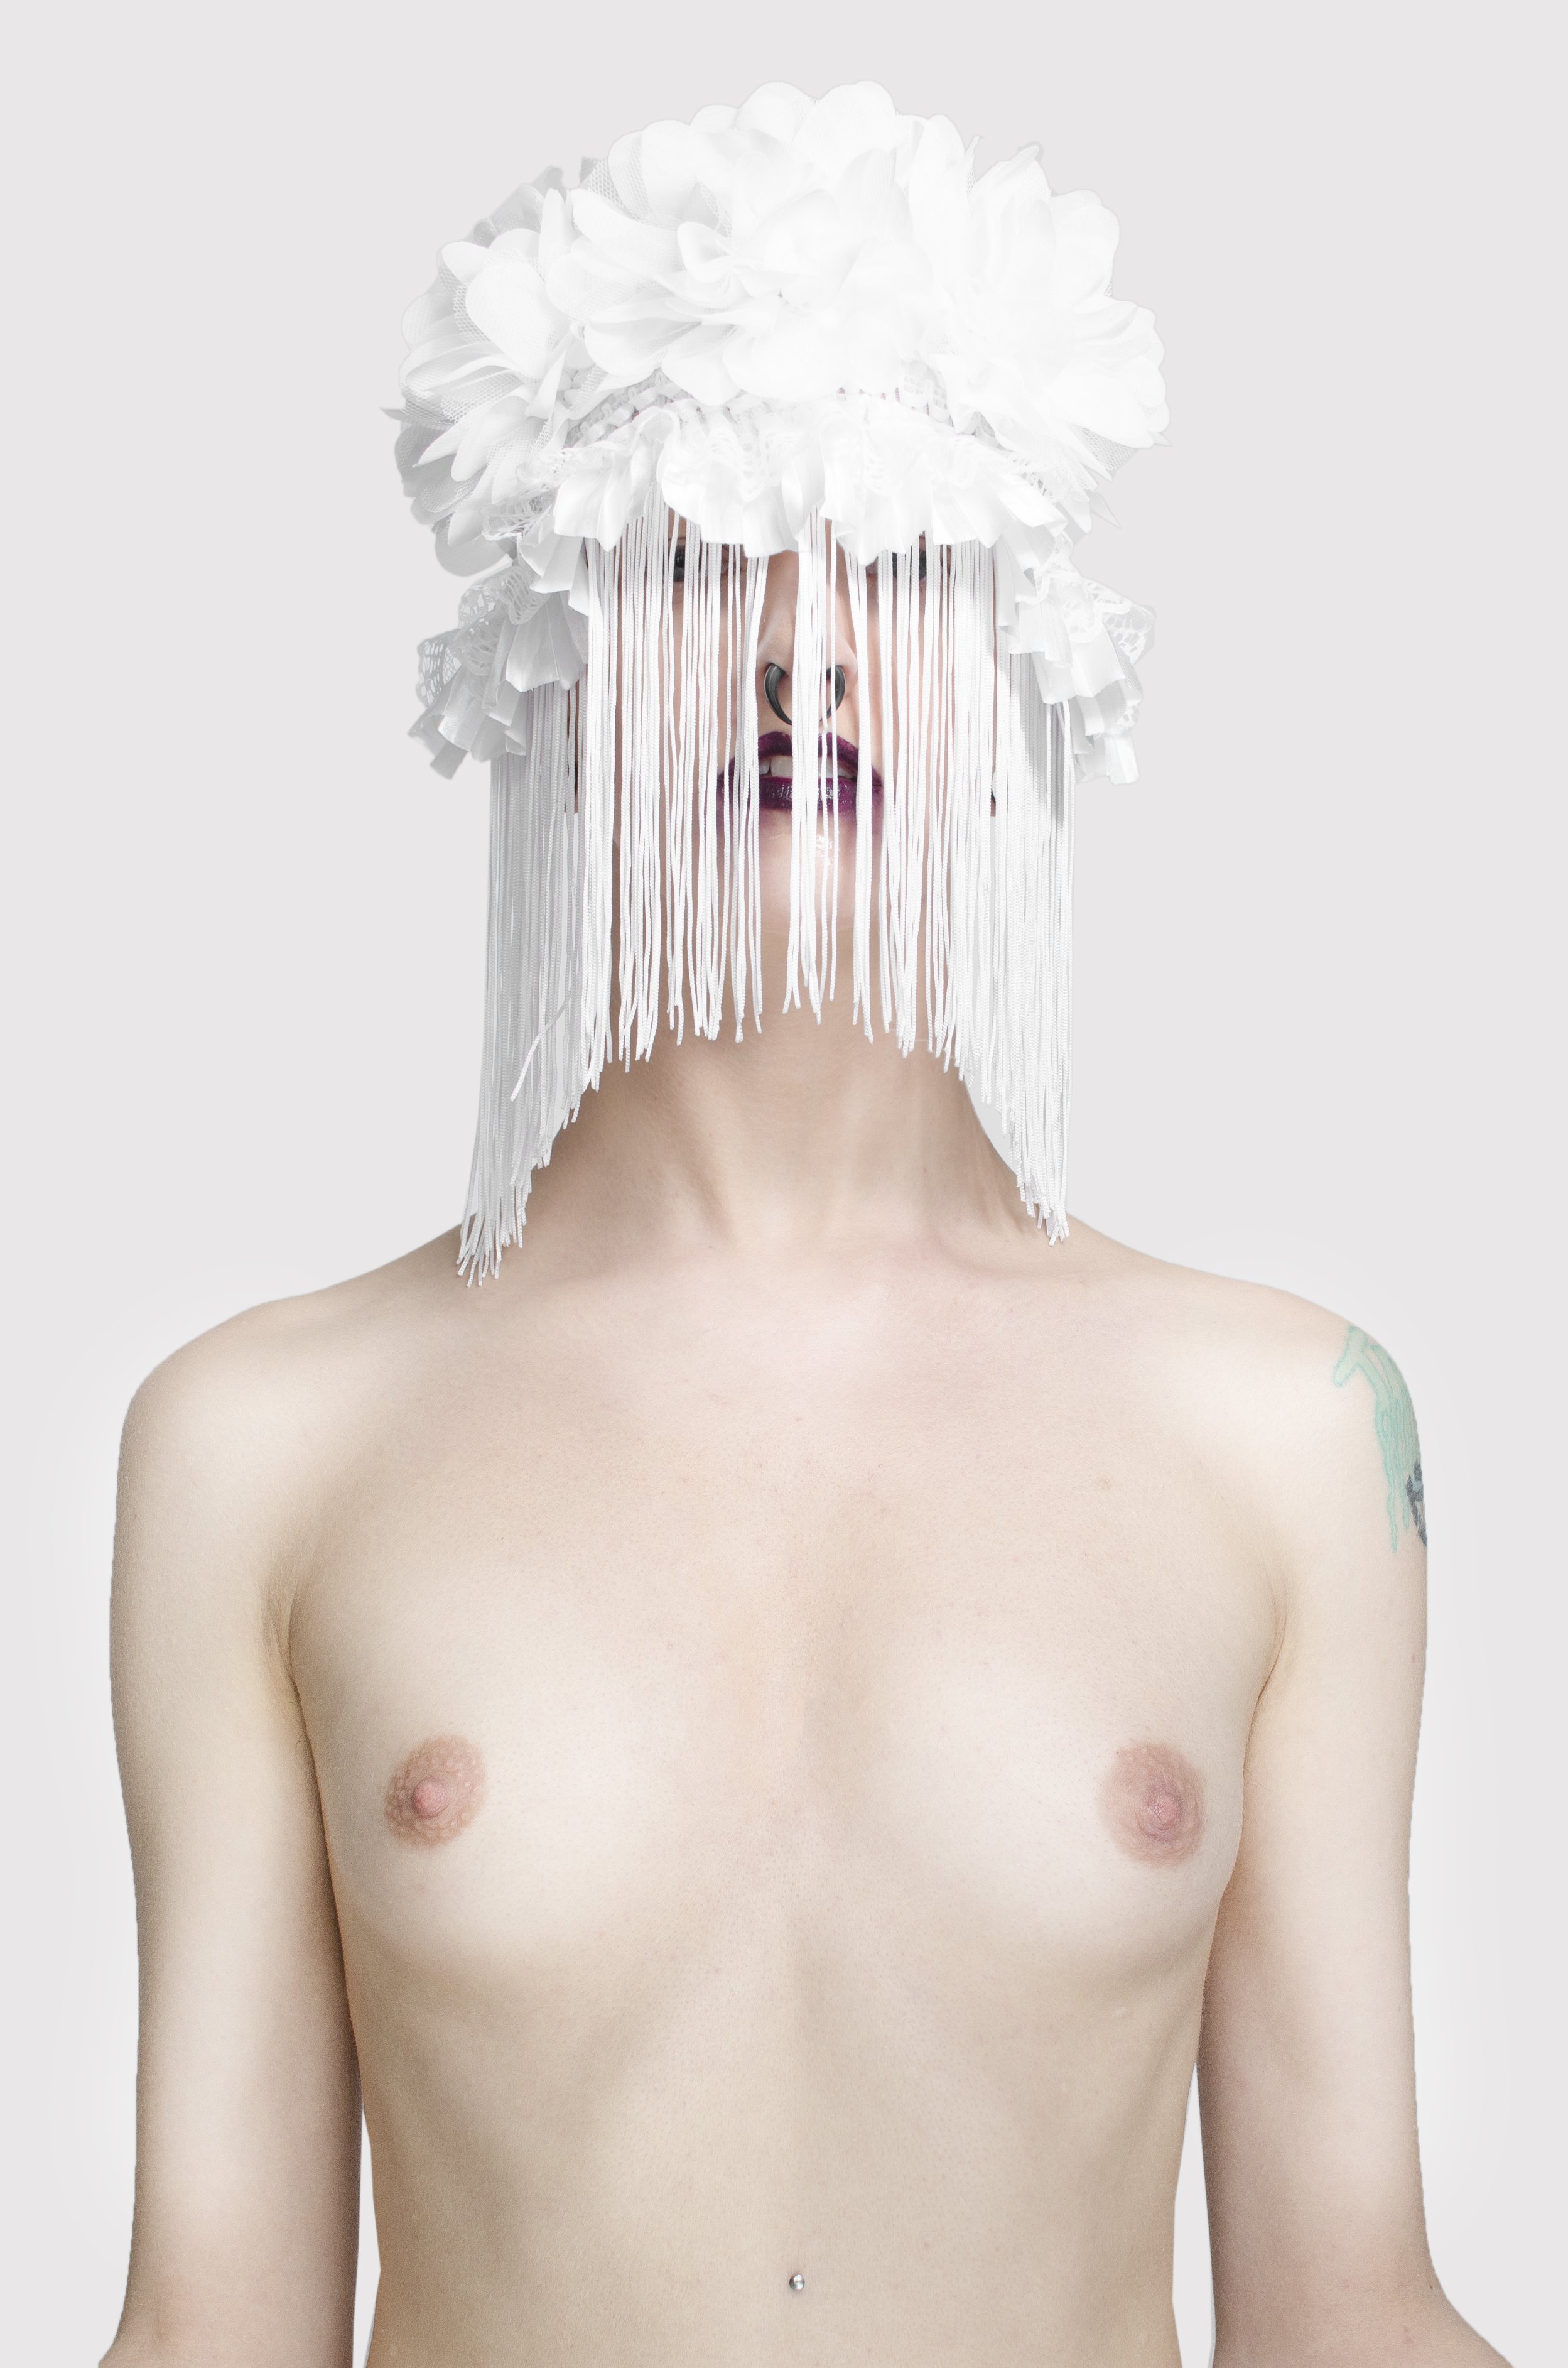  Blindfold/ruff: Bakeneko Designs     Models: Talli lyndsey and Kris Canavan     Photographer: Katelizabeth Sway  